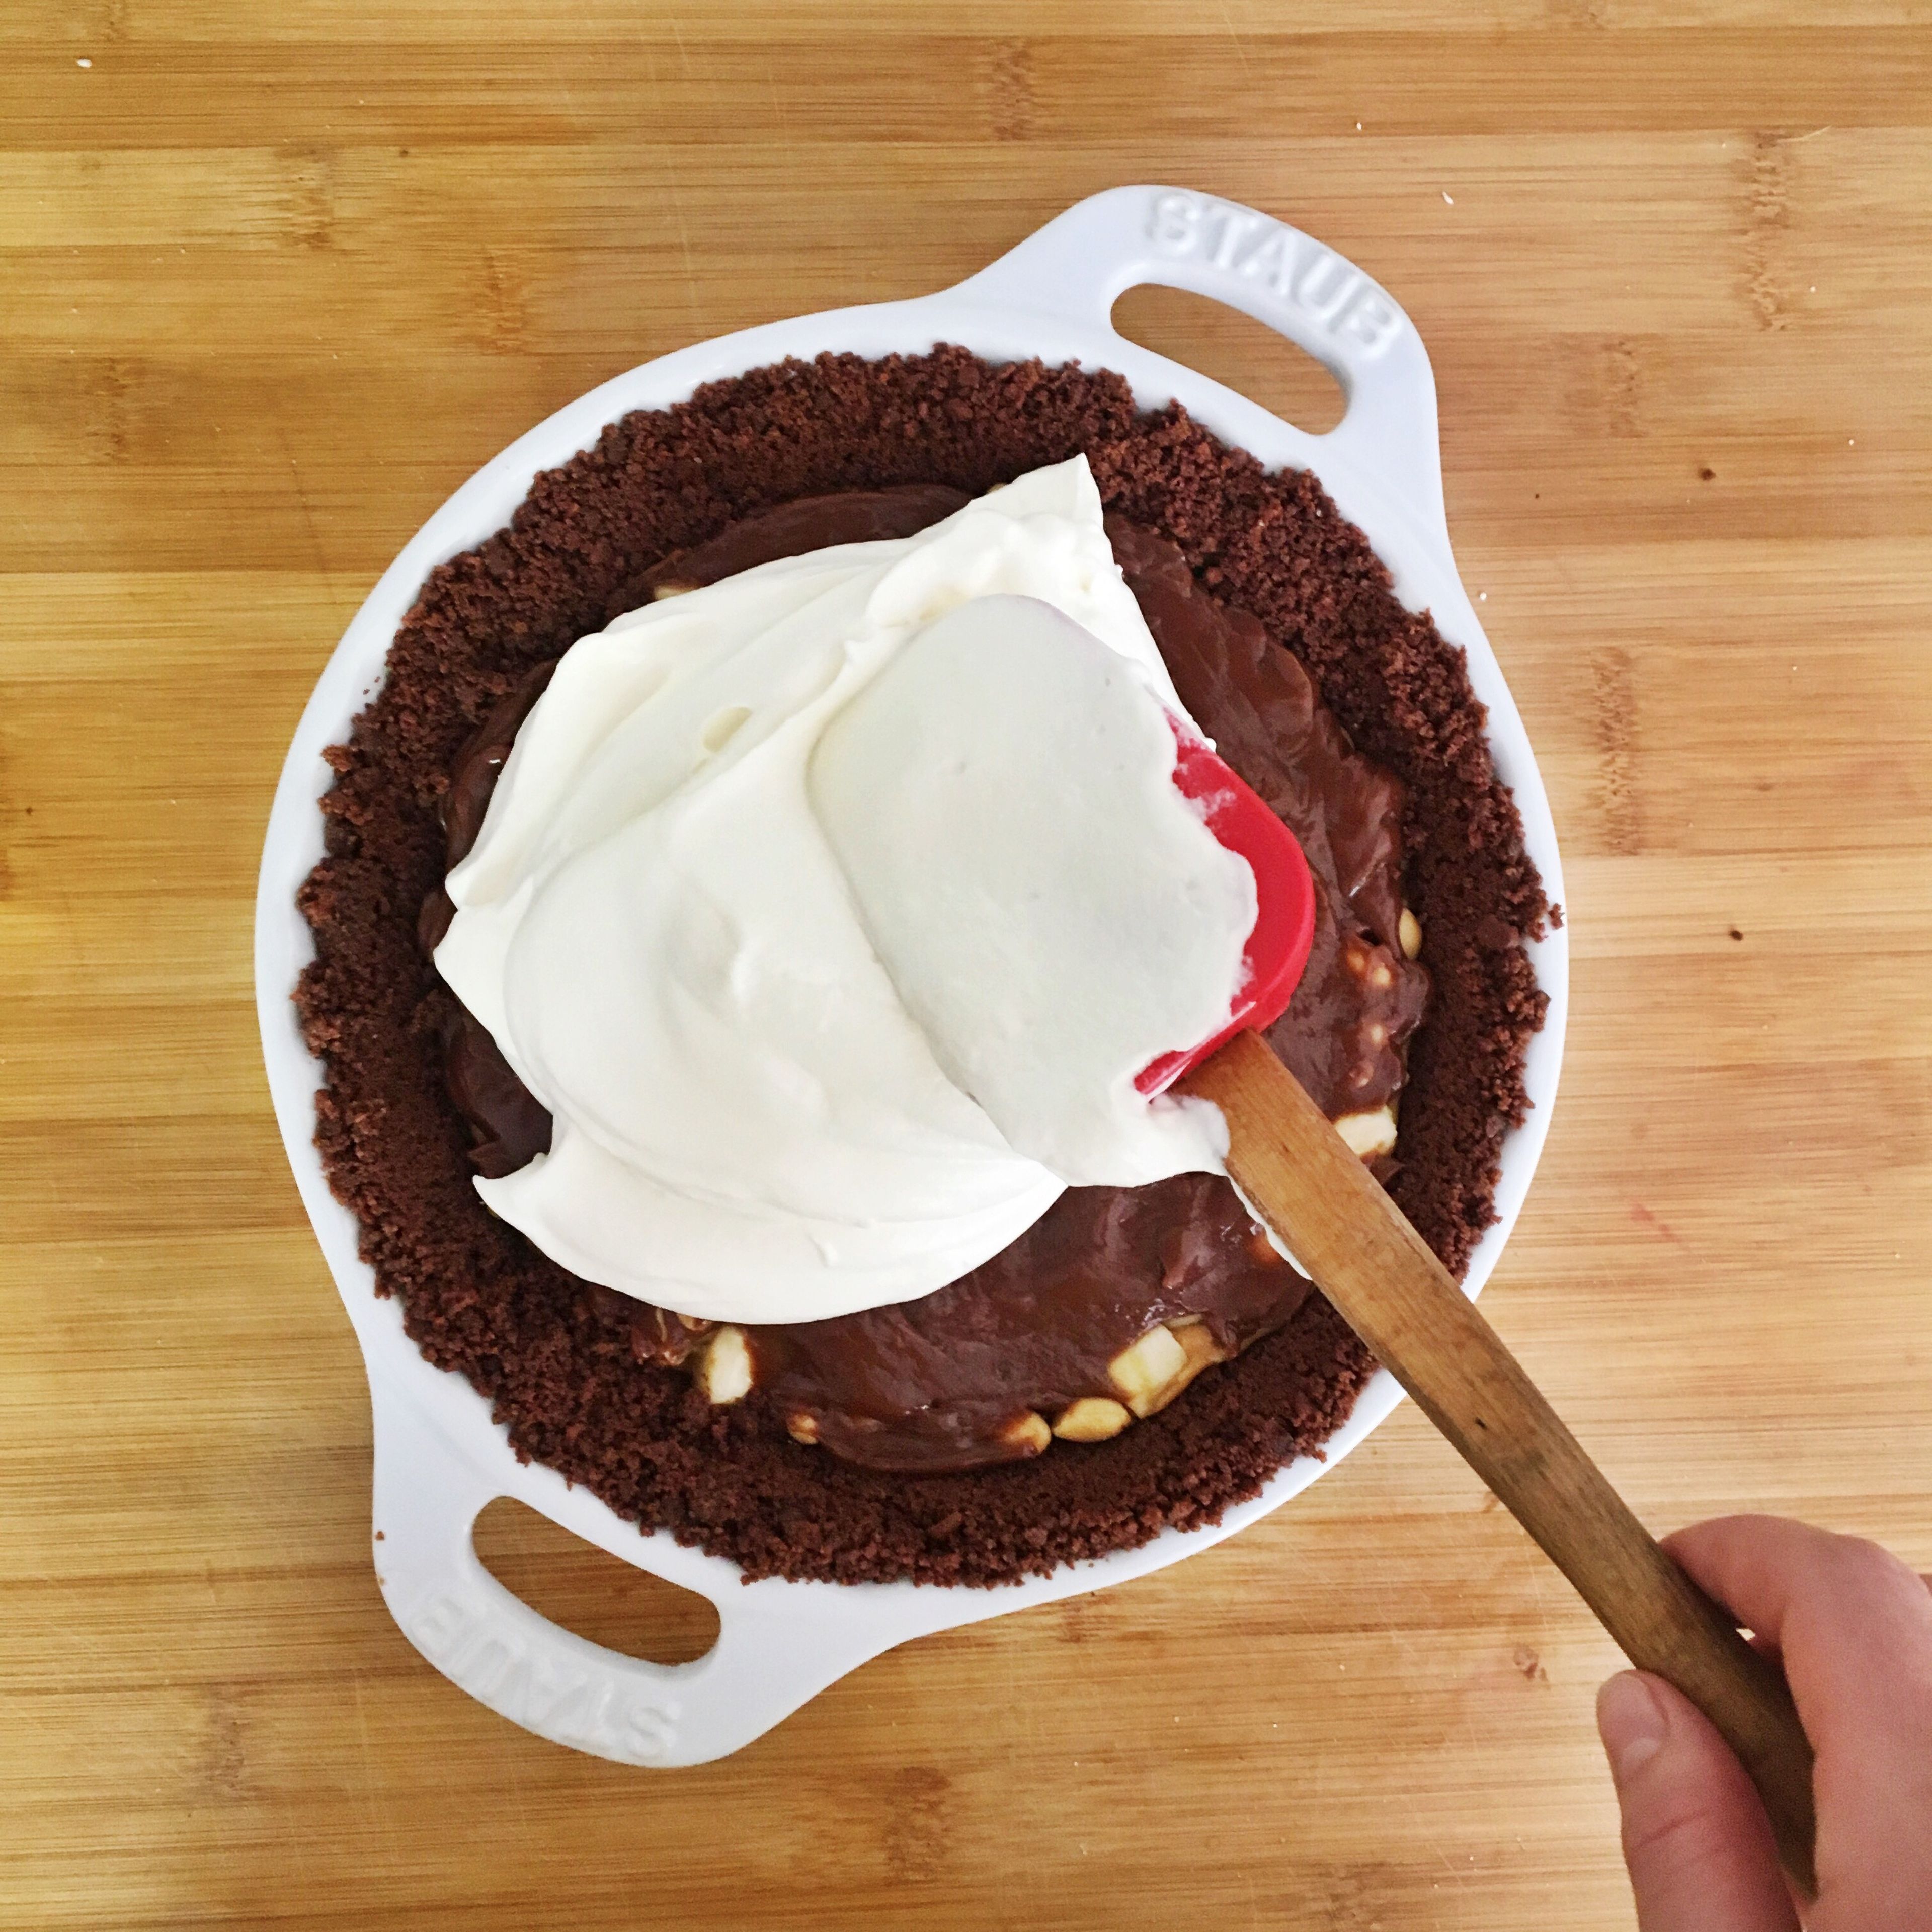 Beat cream with sugar until stiff. Spread on top of the pie.